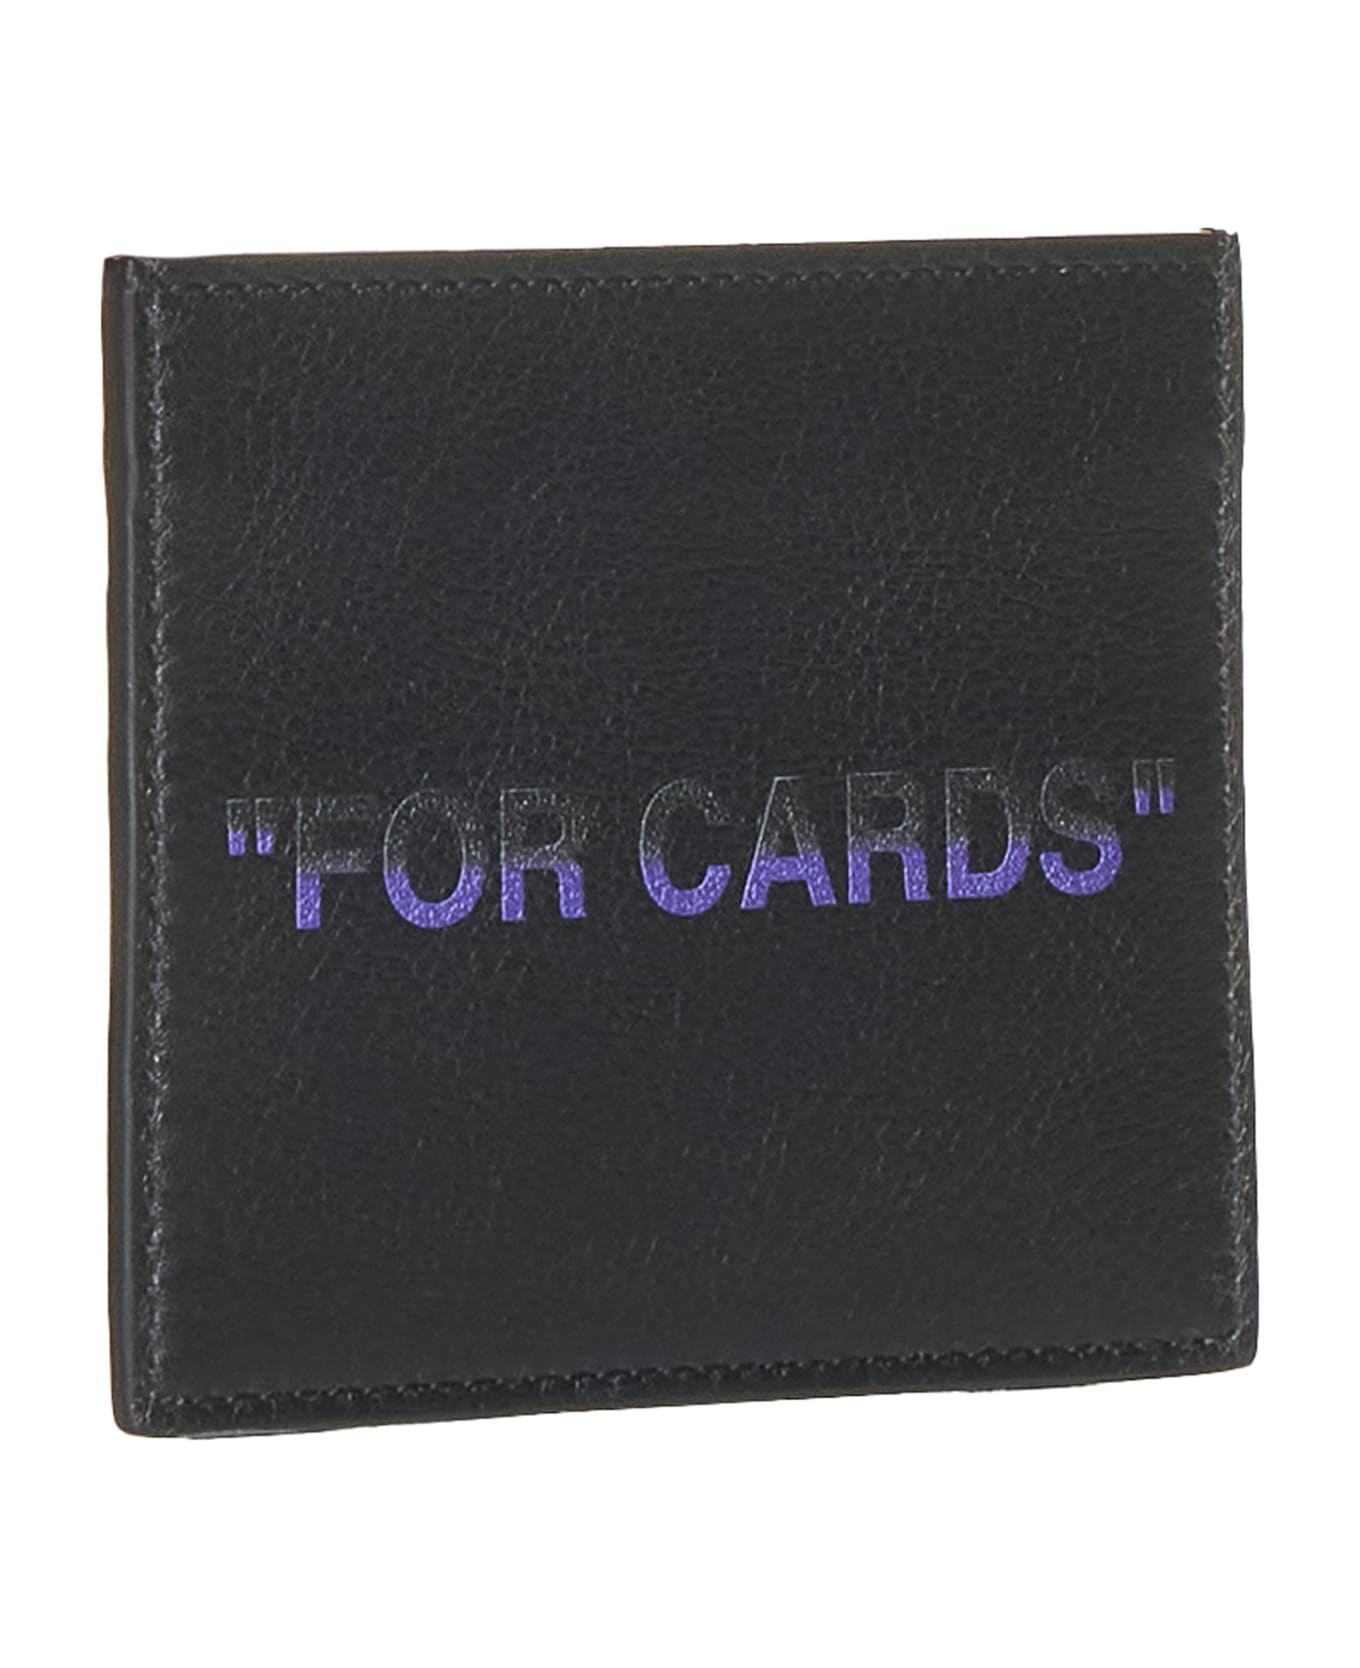 Off-White Wallet - Black purple